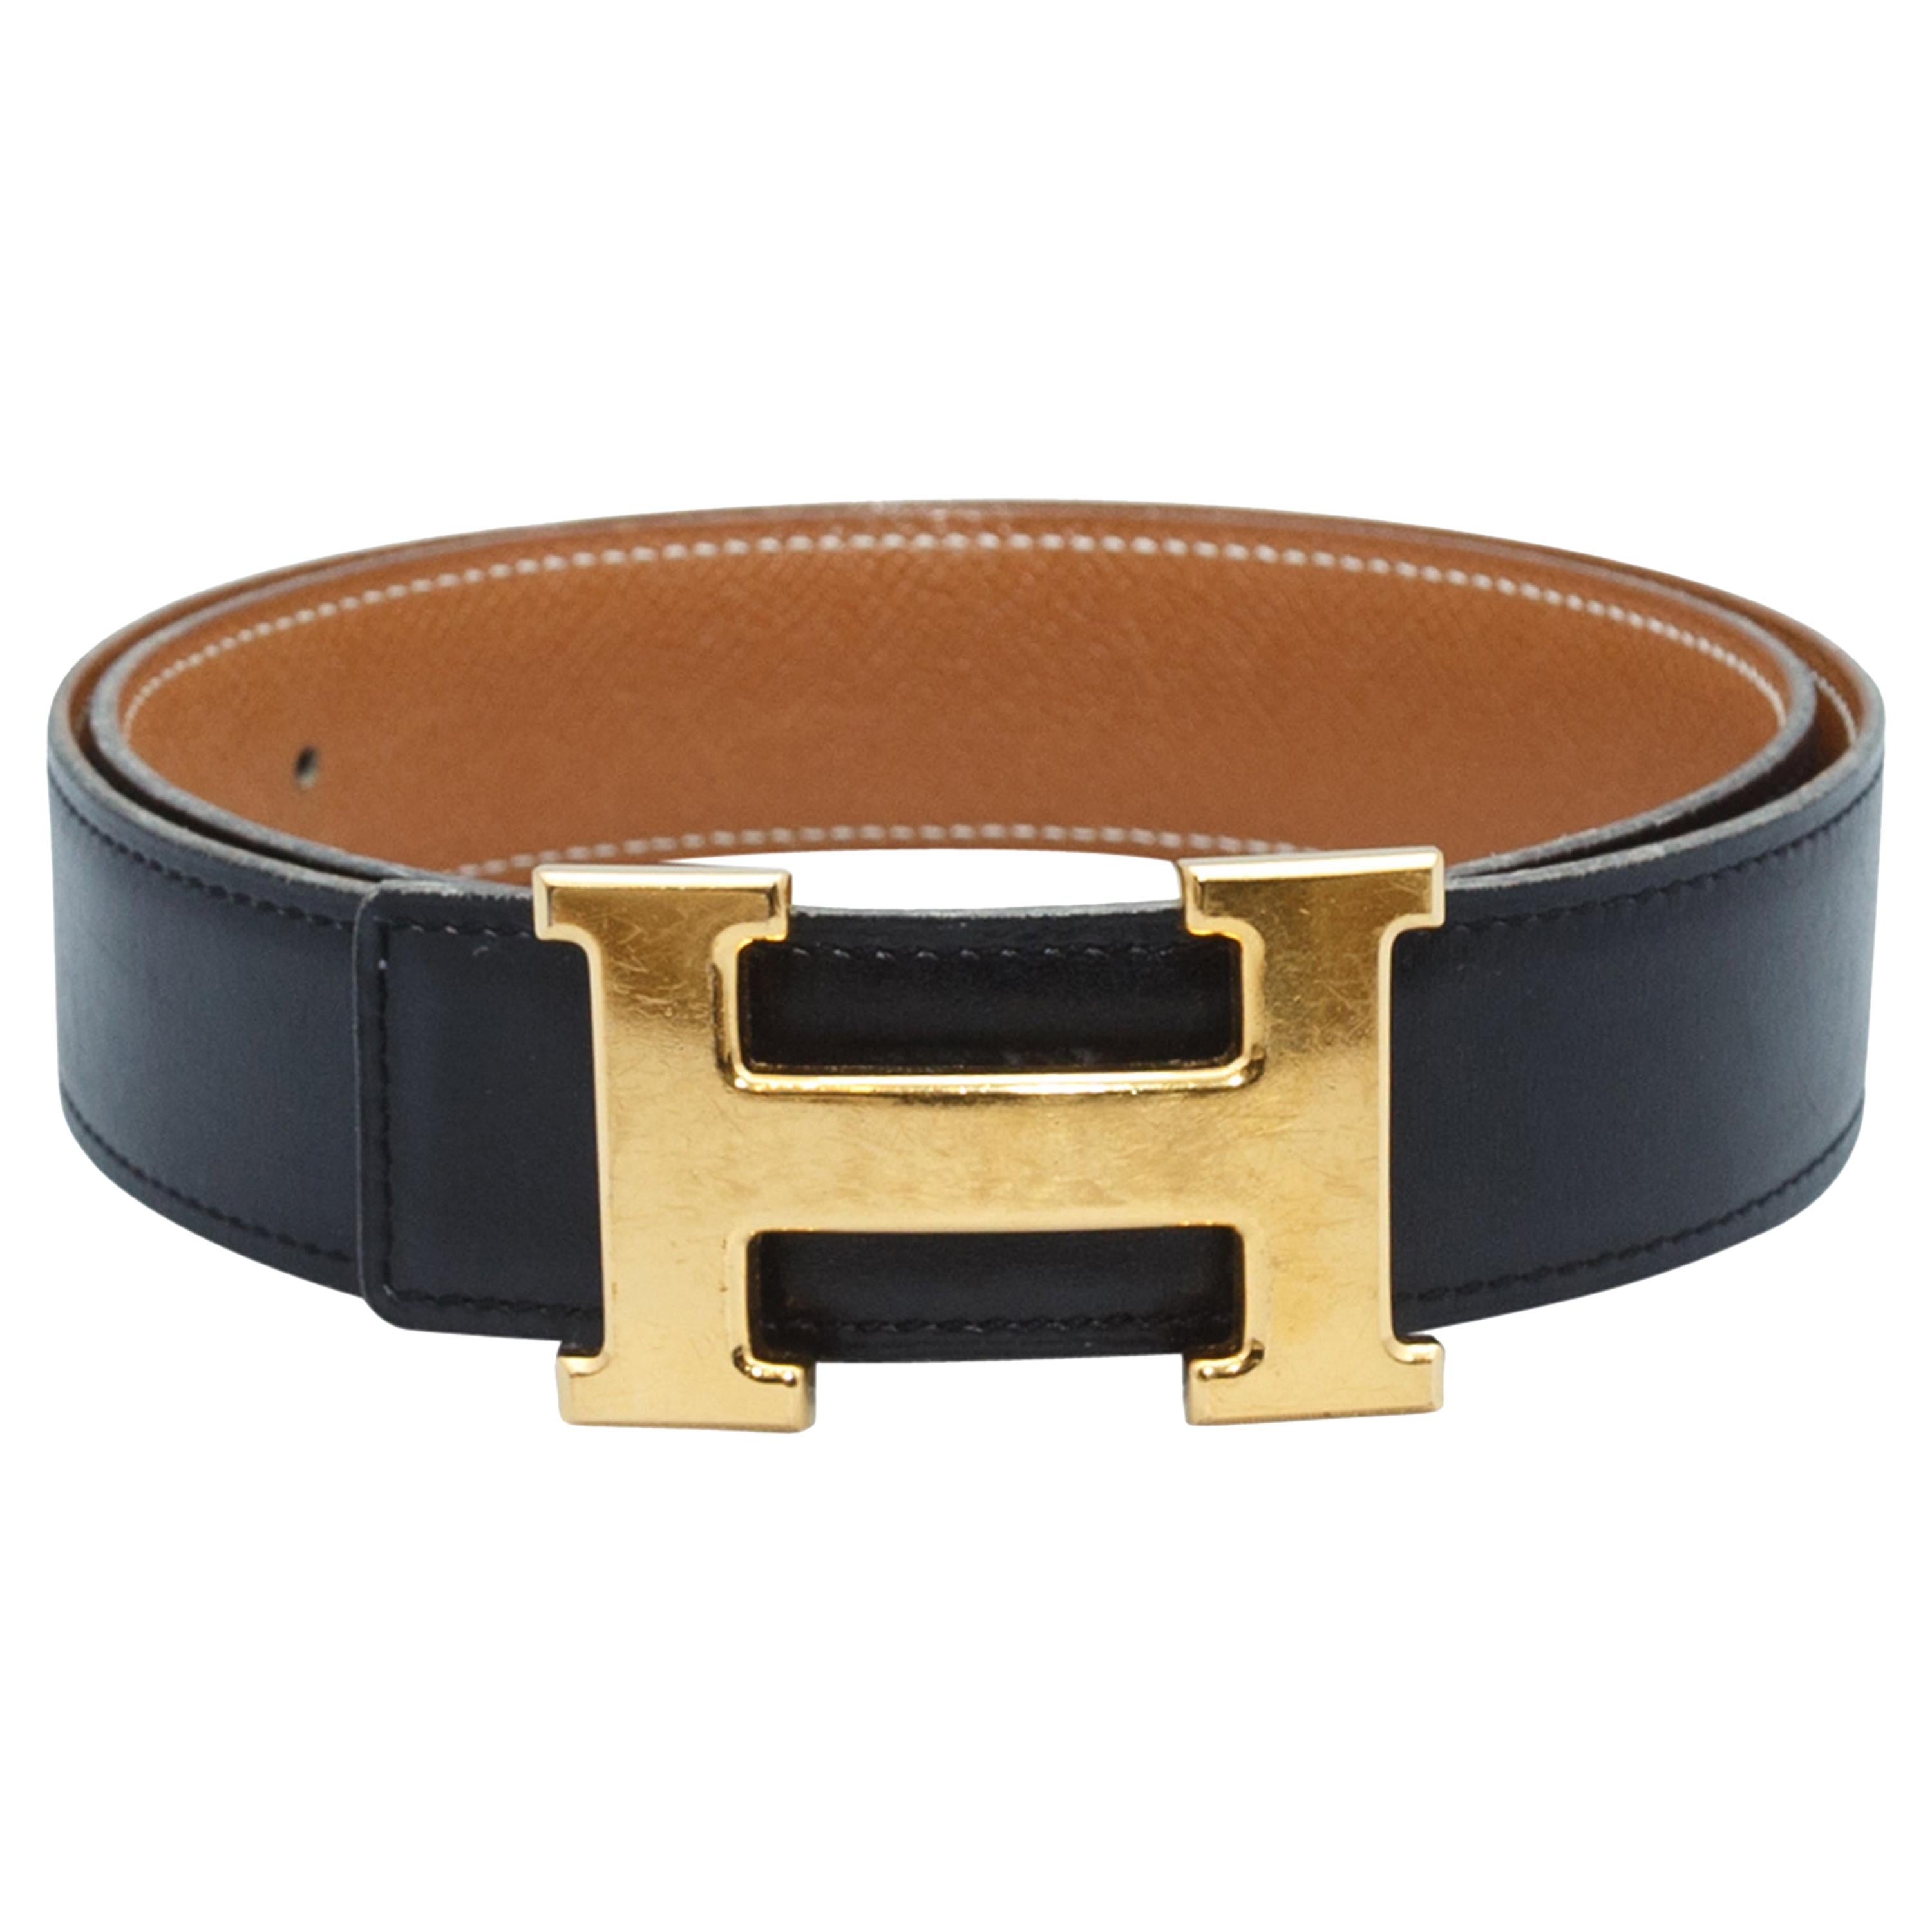 Hermes Black and Gold-Tone Leather Belt 